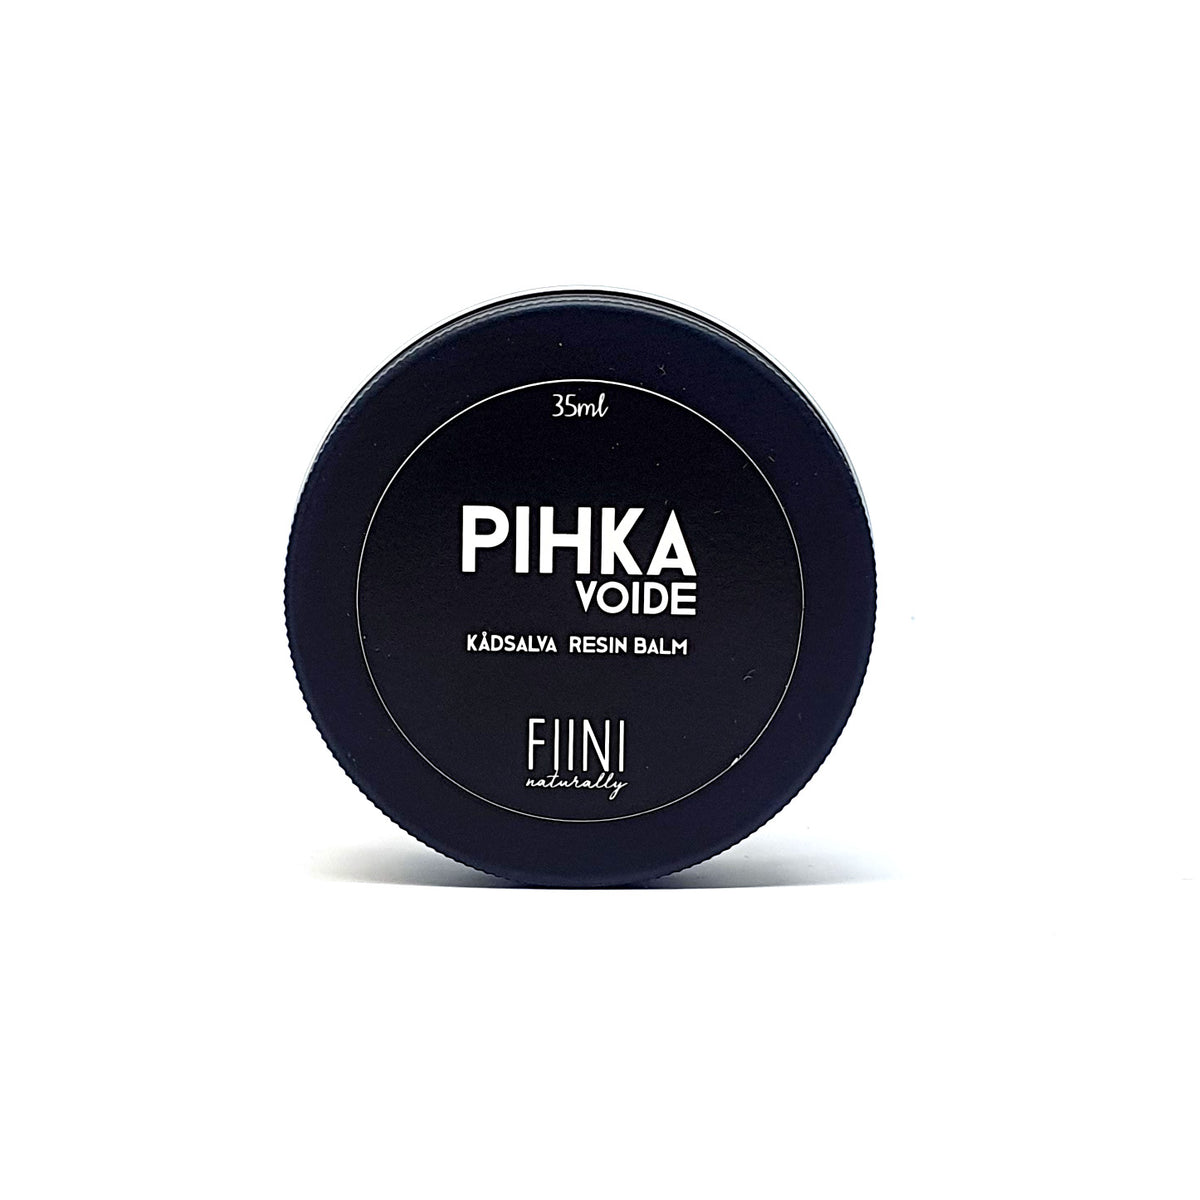 Fiini Pihka-voide 35 ml